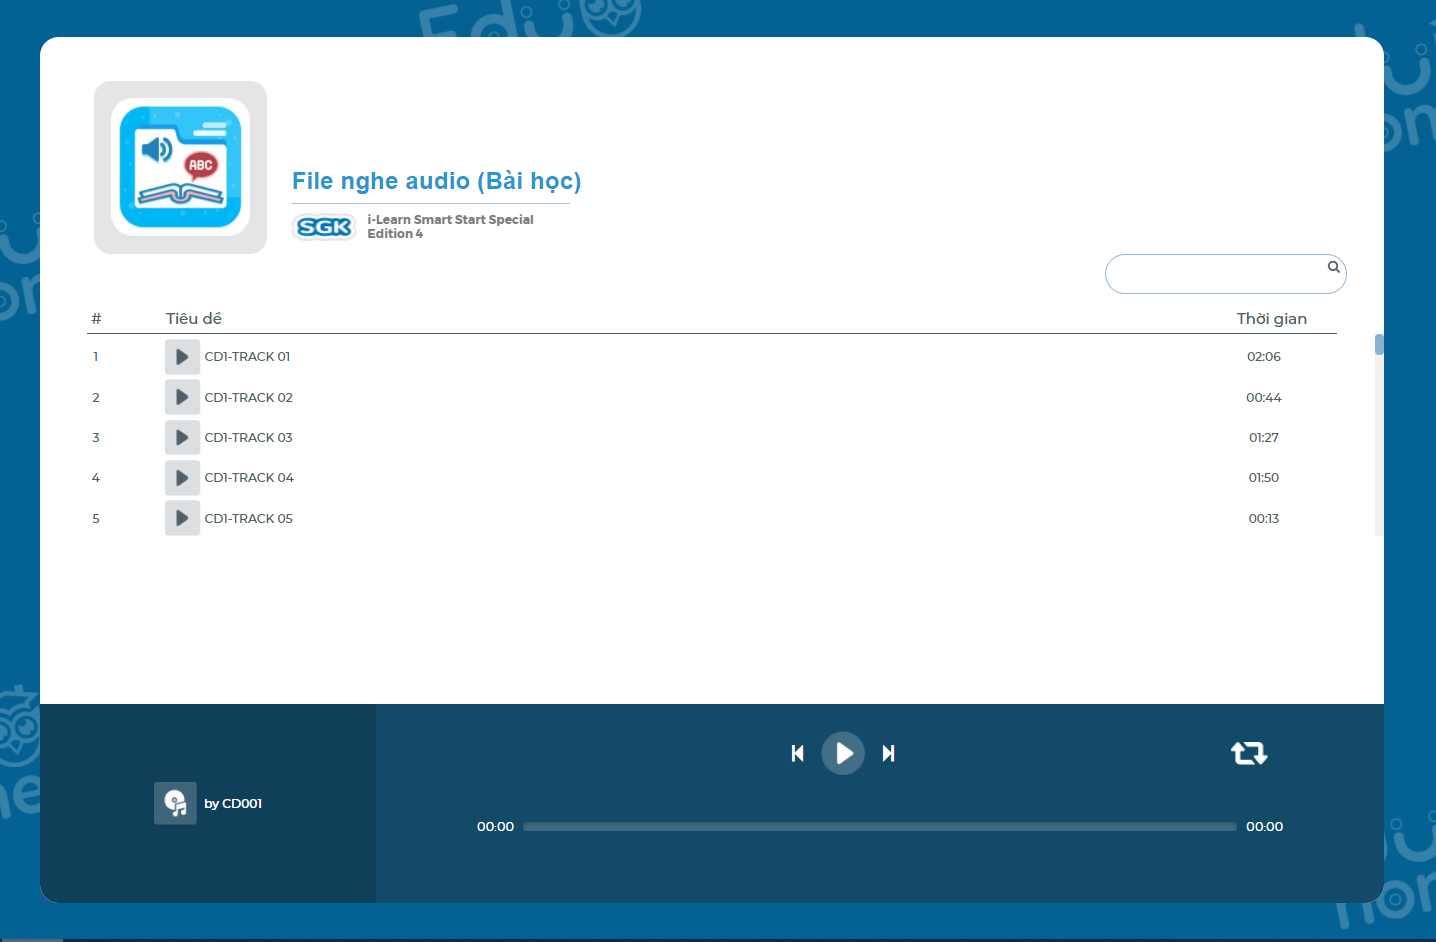 Hình ảnh [E-BOOK] i-Learn Smart Start Special Edition 4 File nghe Audio bài học